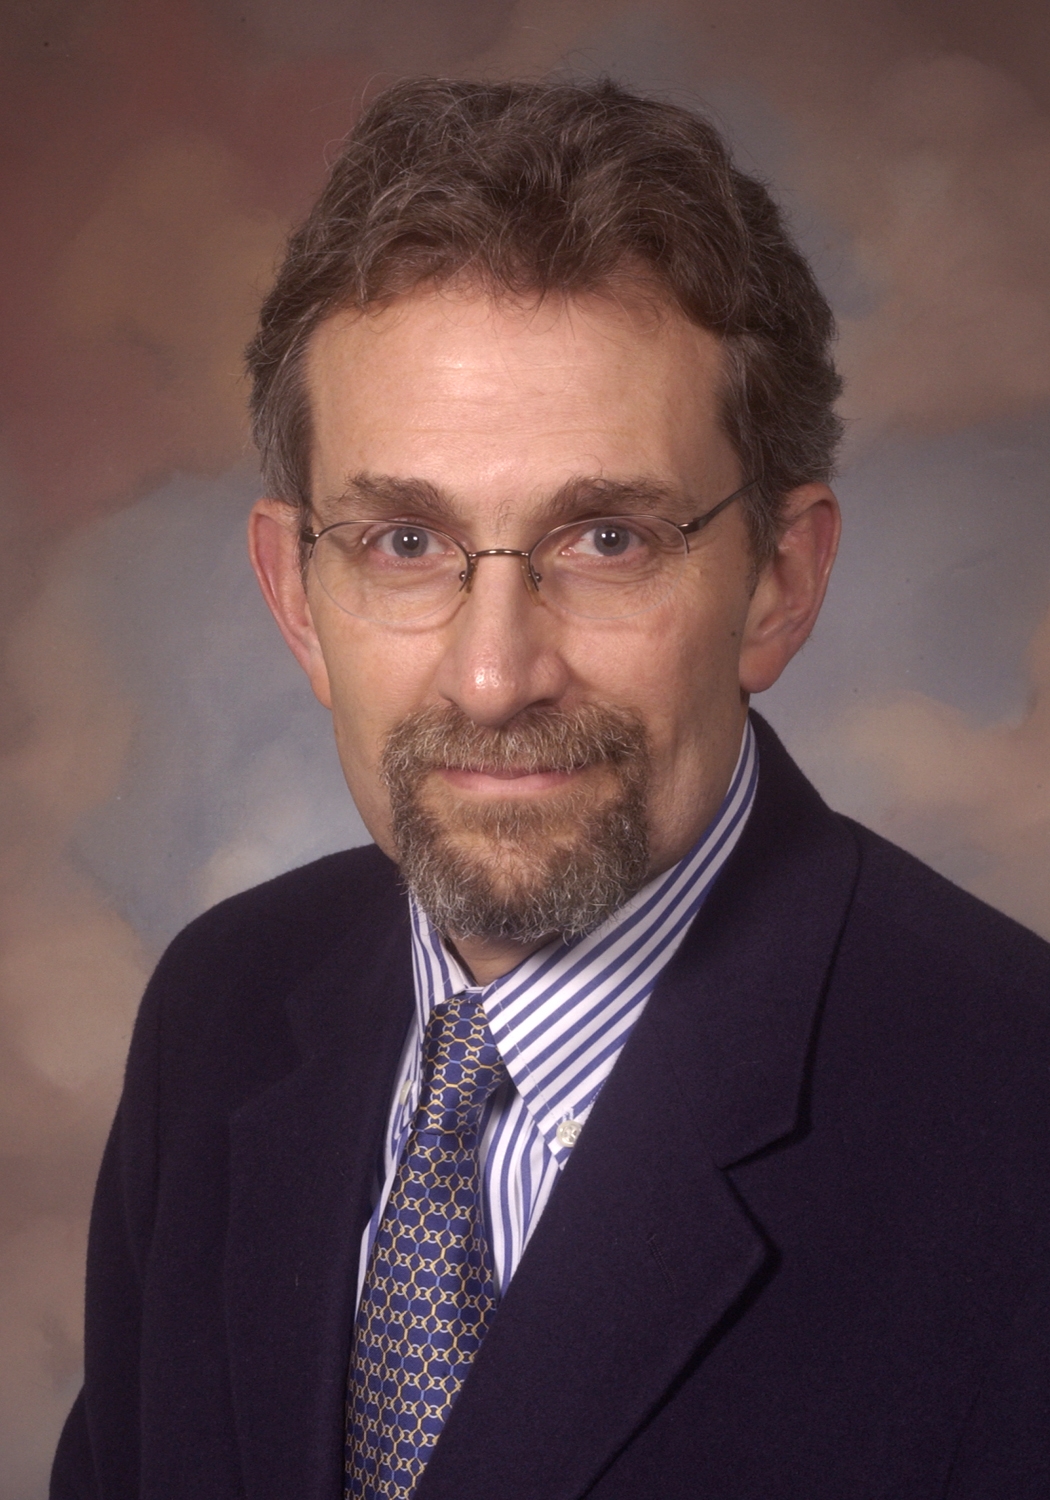 David J. Bjorkman, M.D., M.S.P.H., Interium Dean of School of Medicine